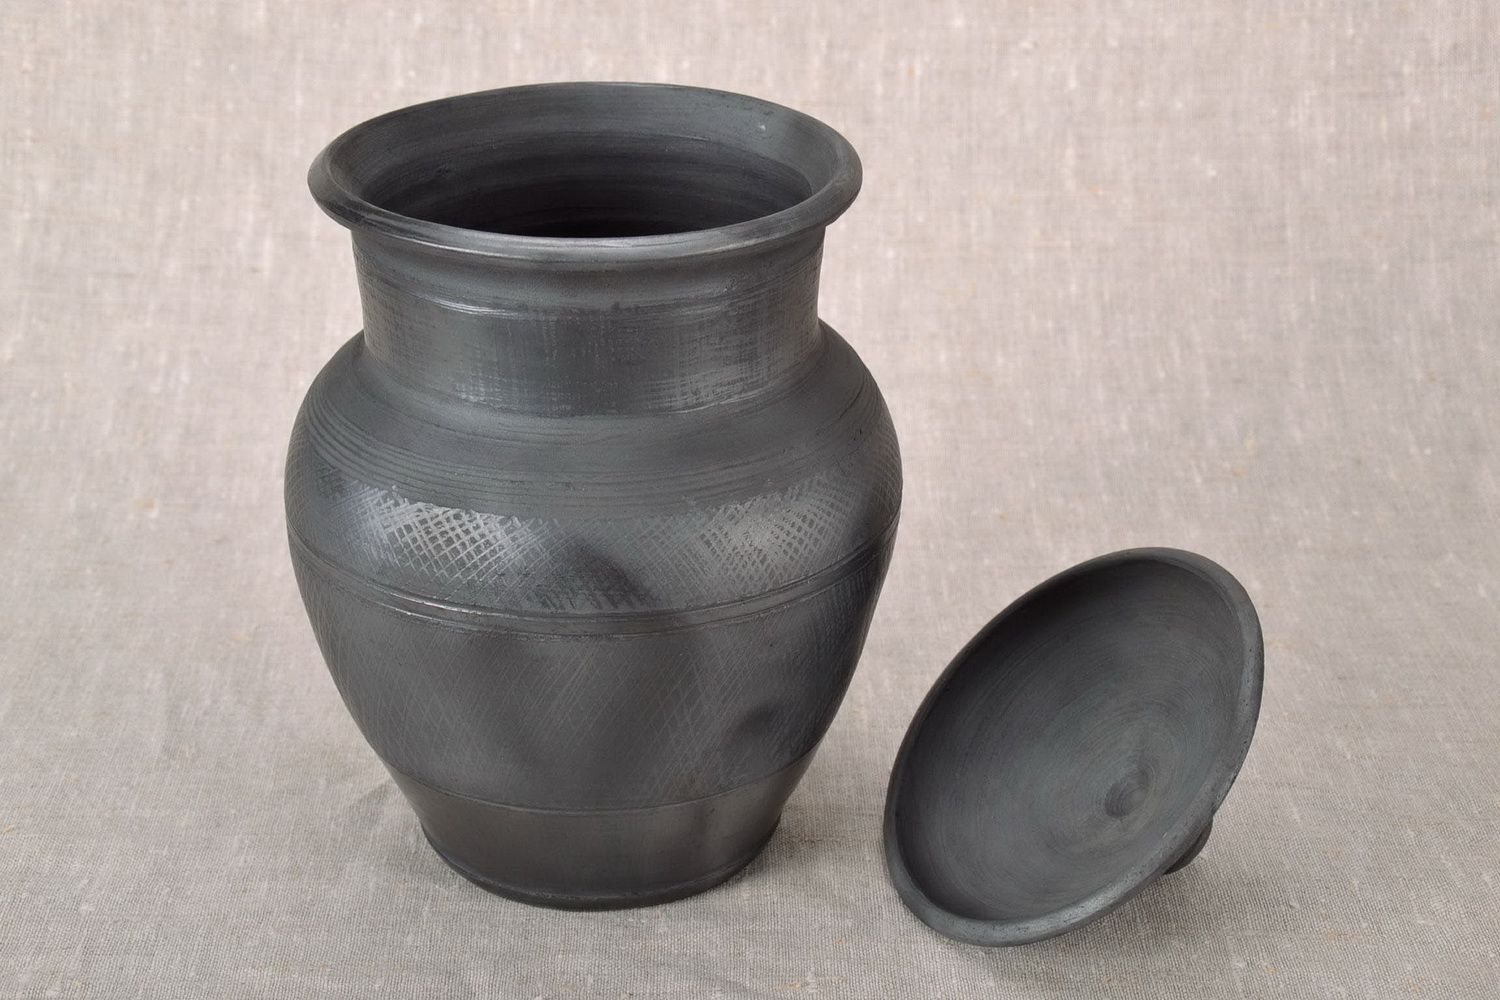 60 oz ceramic milk jug with handle and lid in black color 2,5 lb photo 3